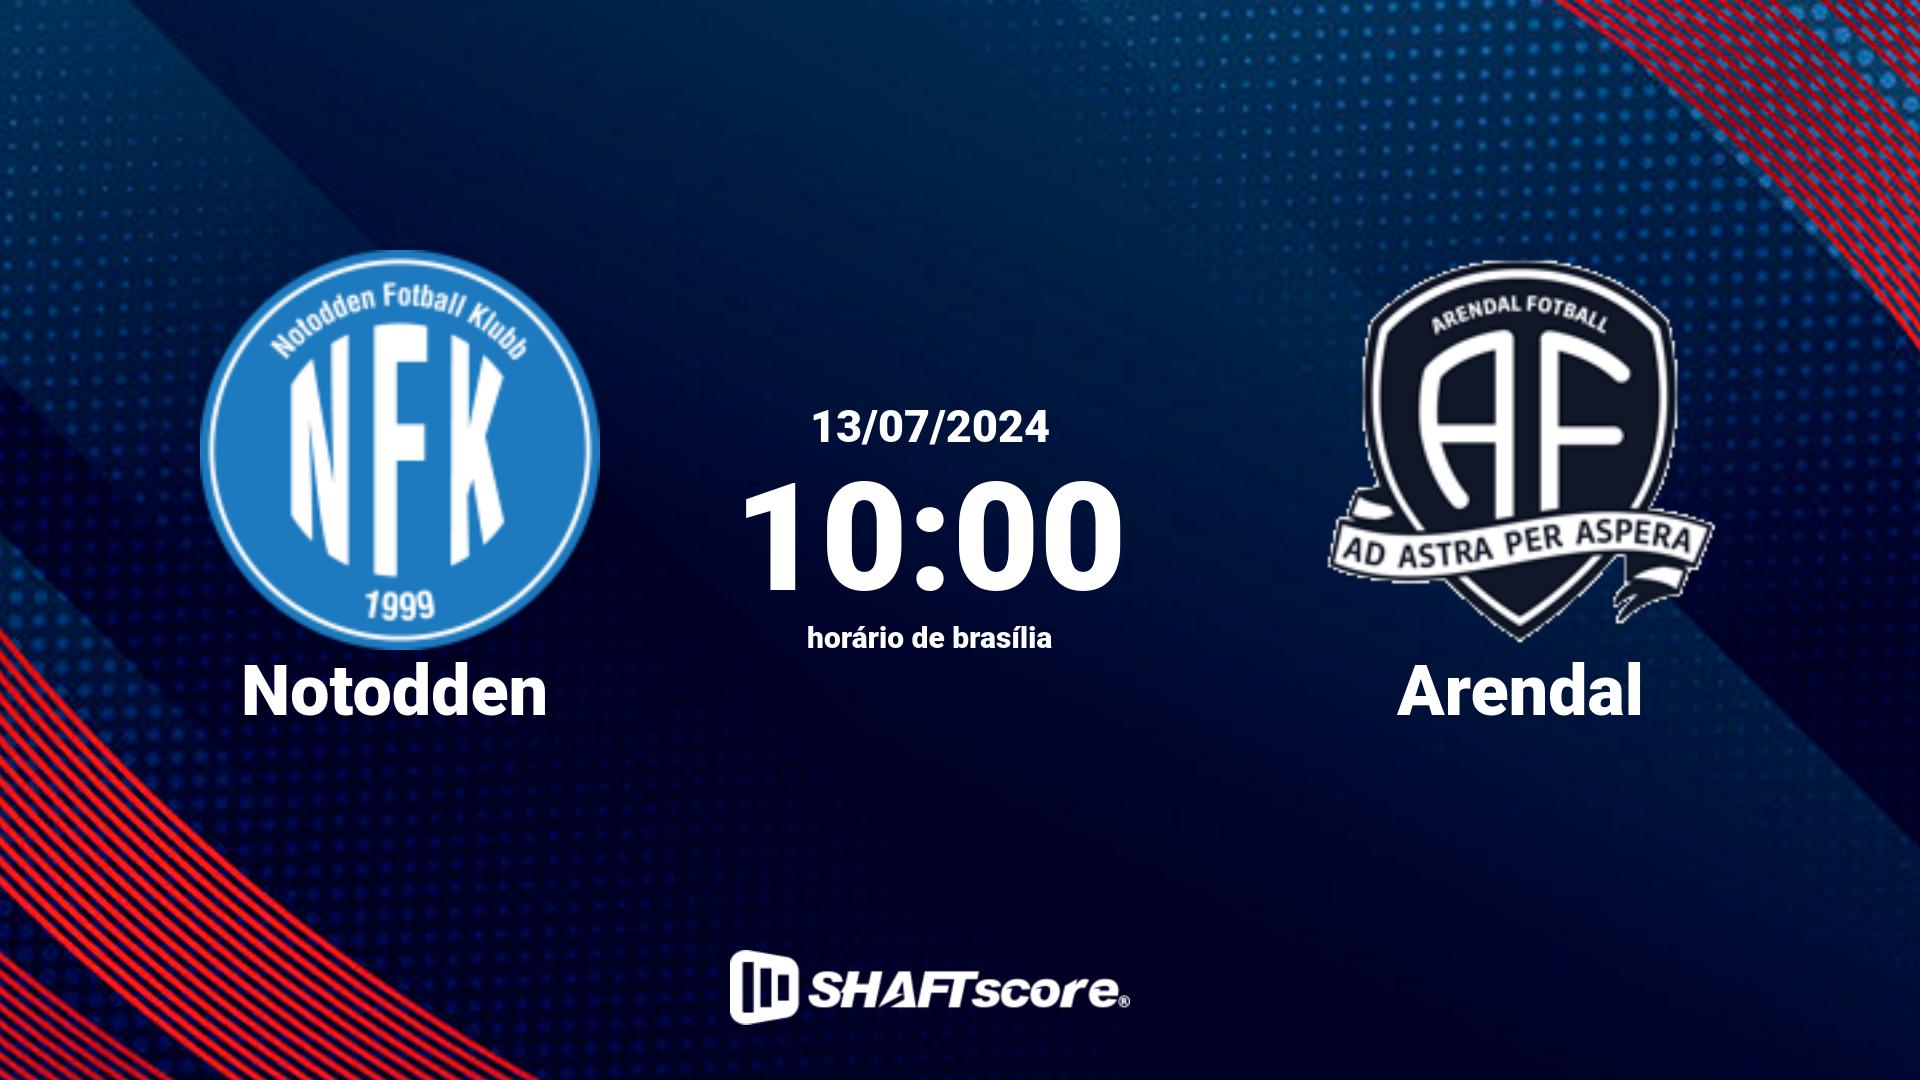 Estatísticas do jogo Notodden vs Arendal 13.07 10:00